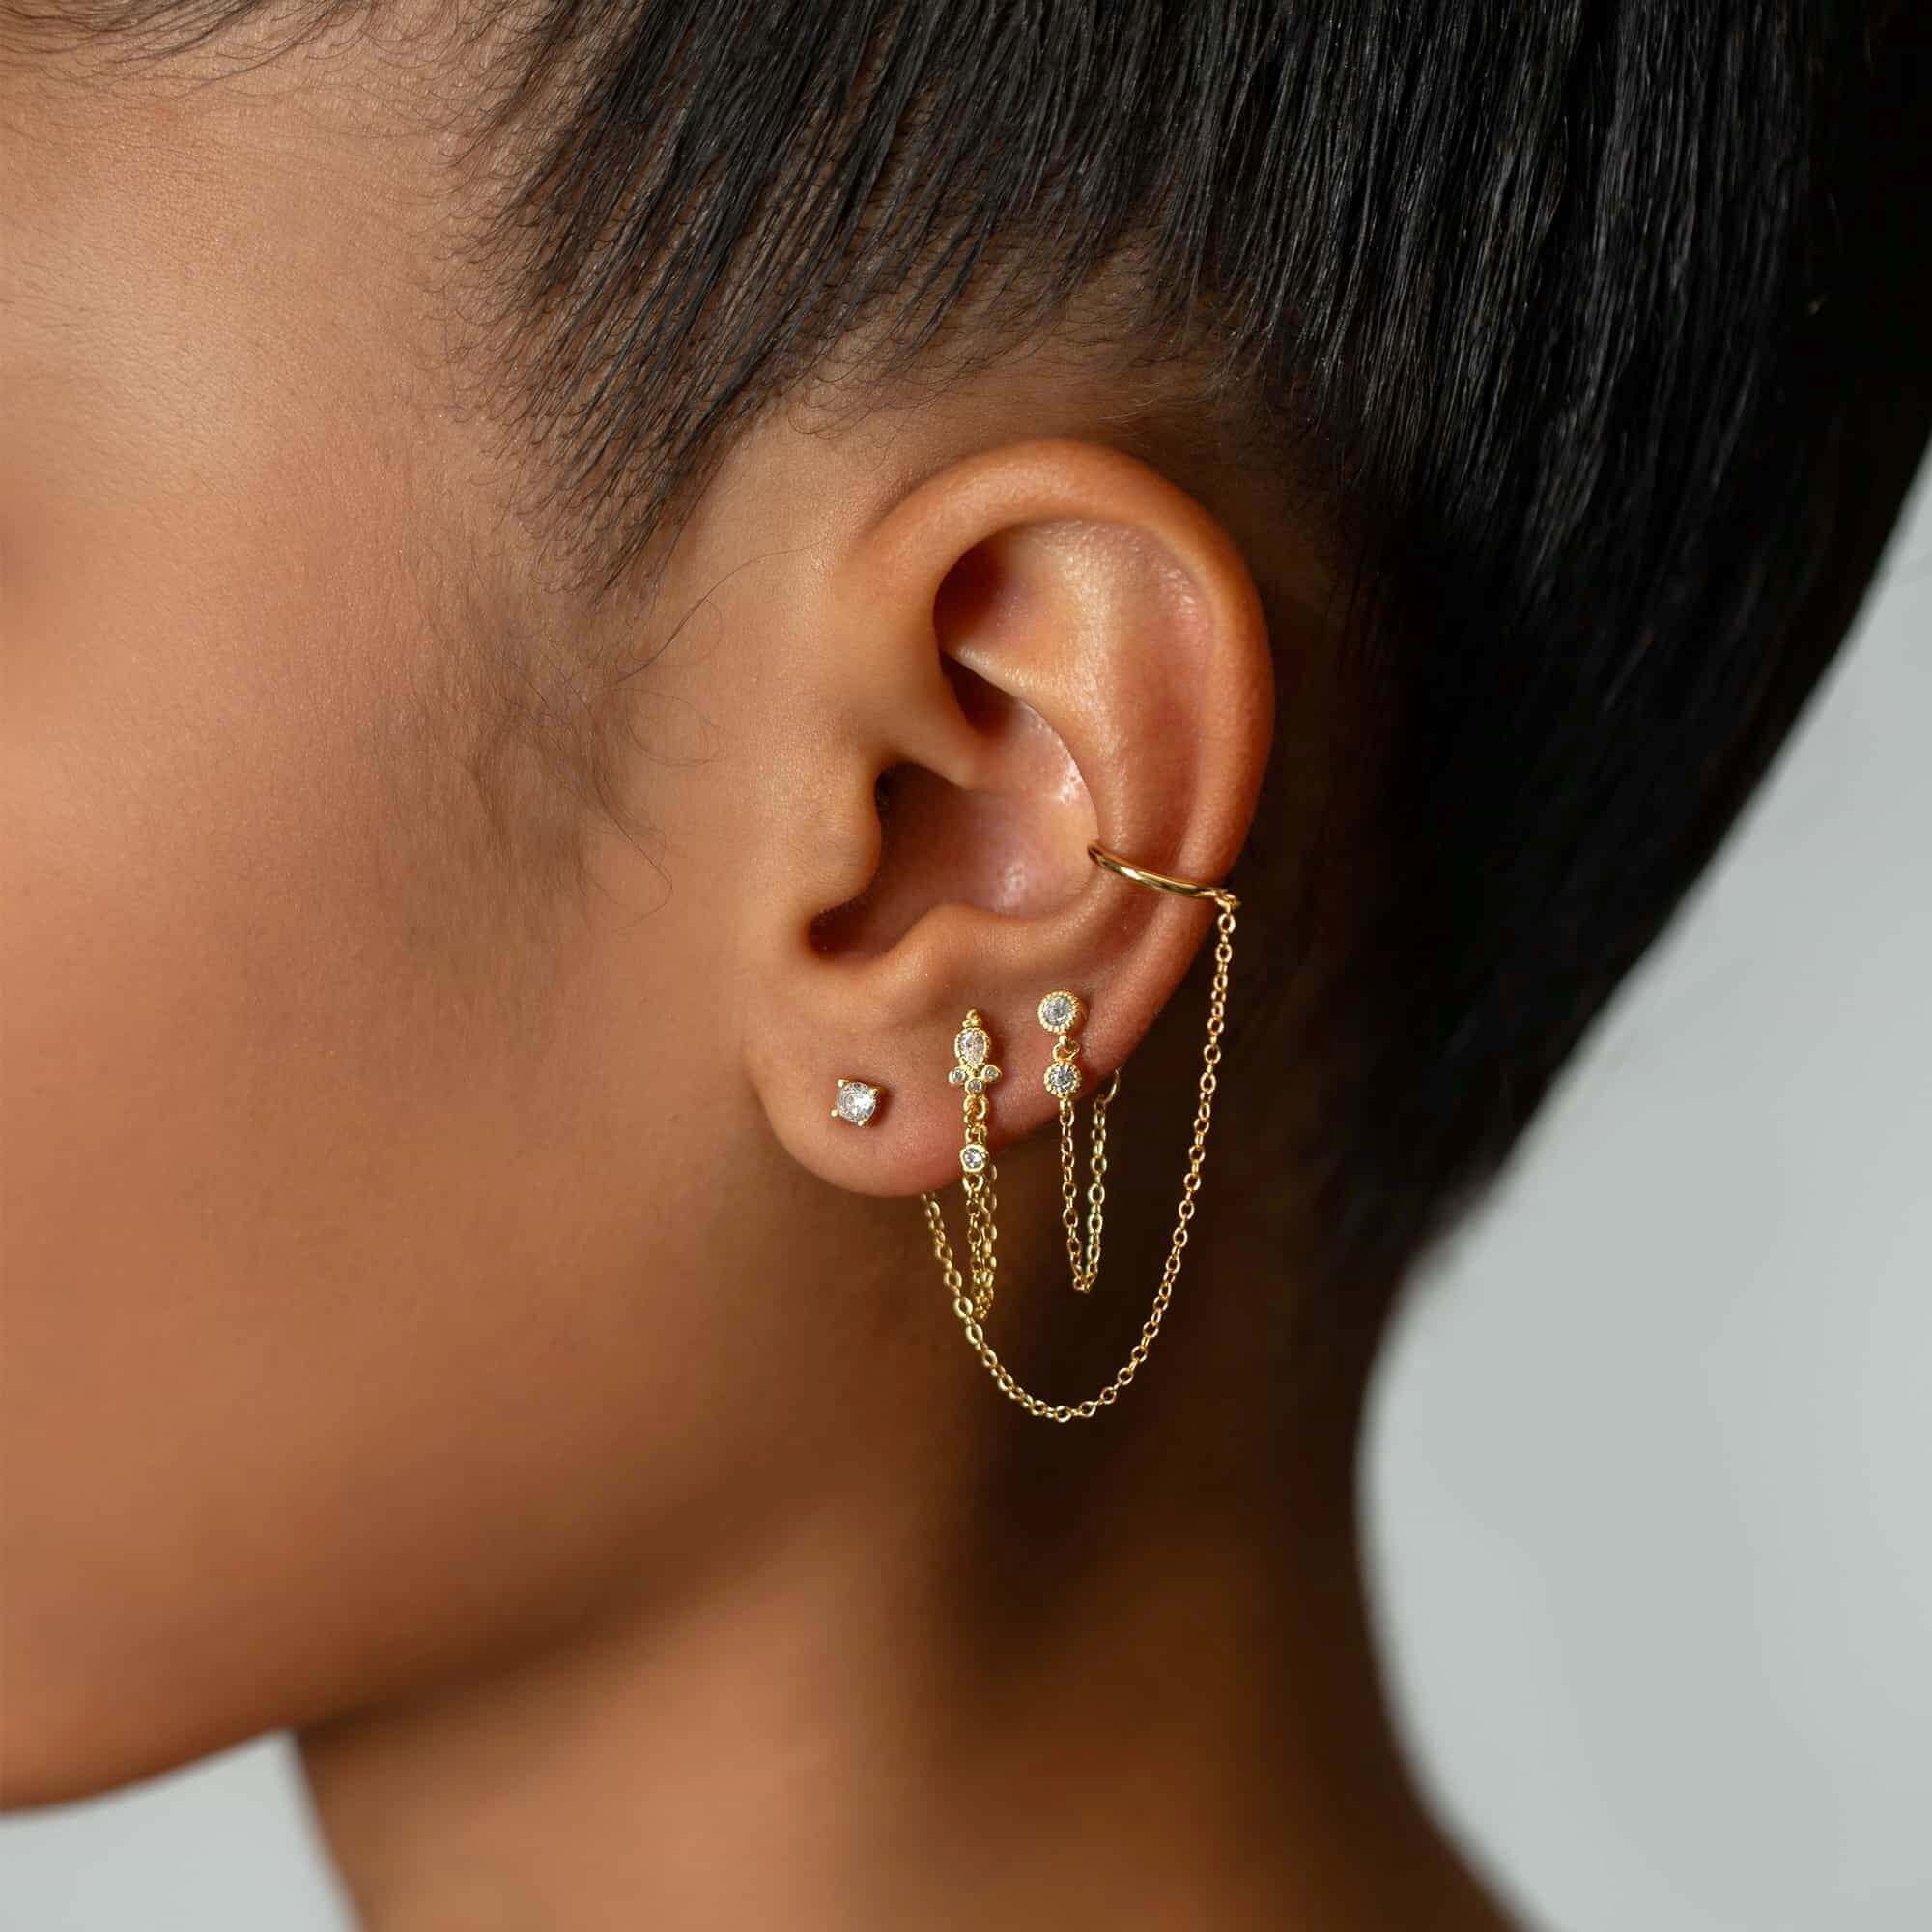 Stylish Chain Earrings Trends: Top Picks